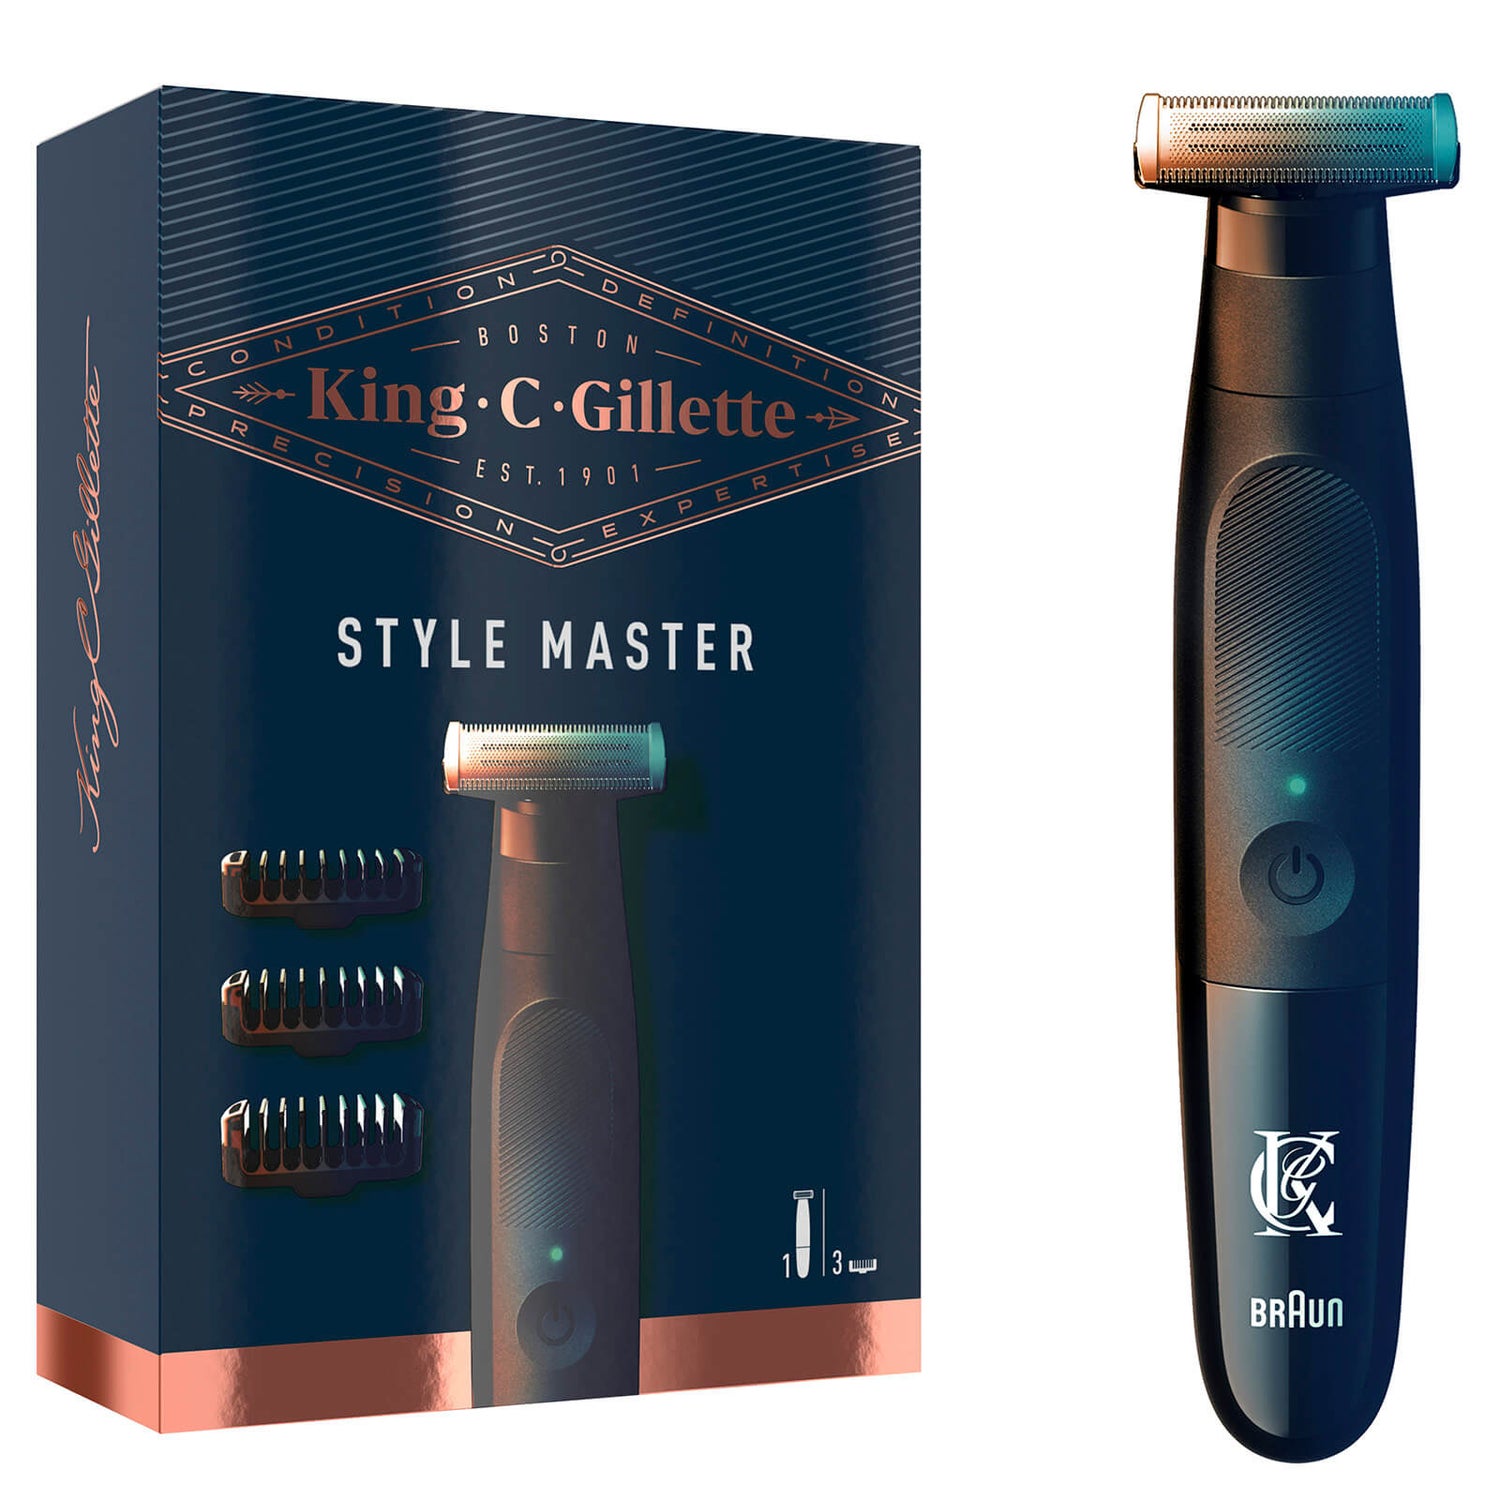 King C. Gillette Style Master